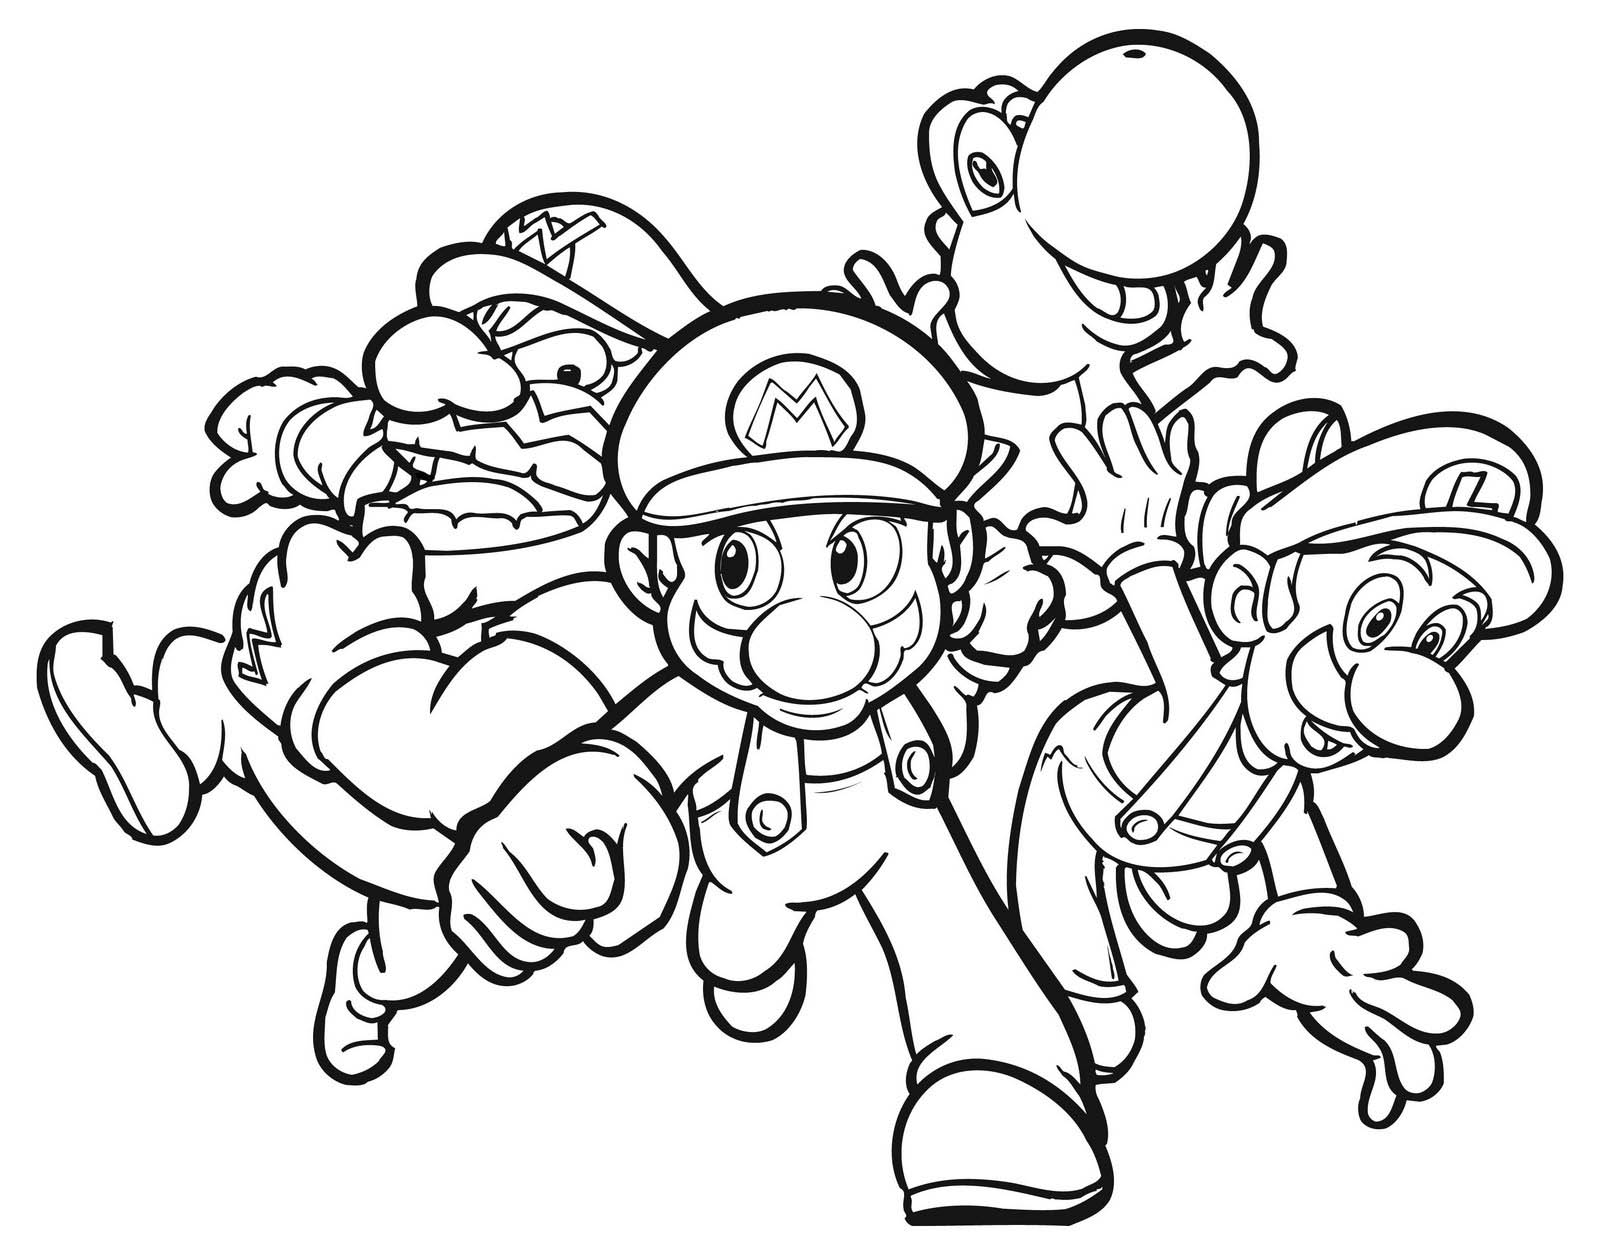 Coloring page: Super Mario Bros (Video Games) #153648 - Printable coloring pages